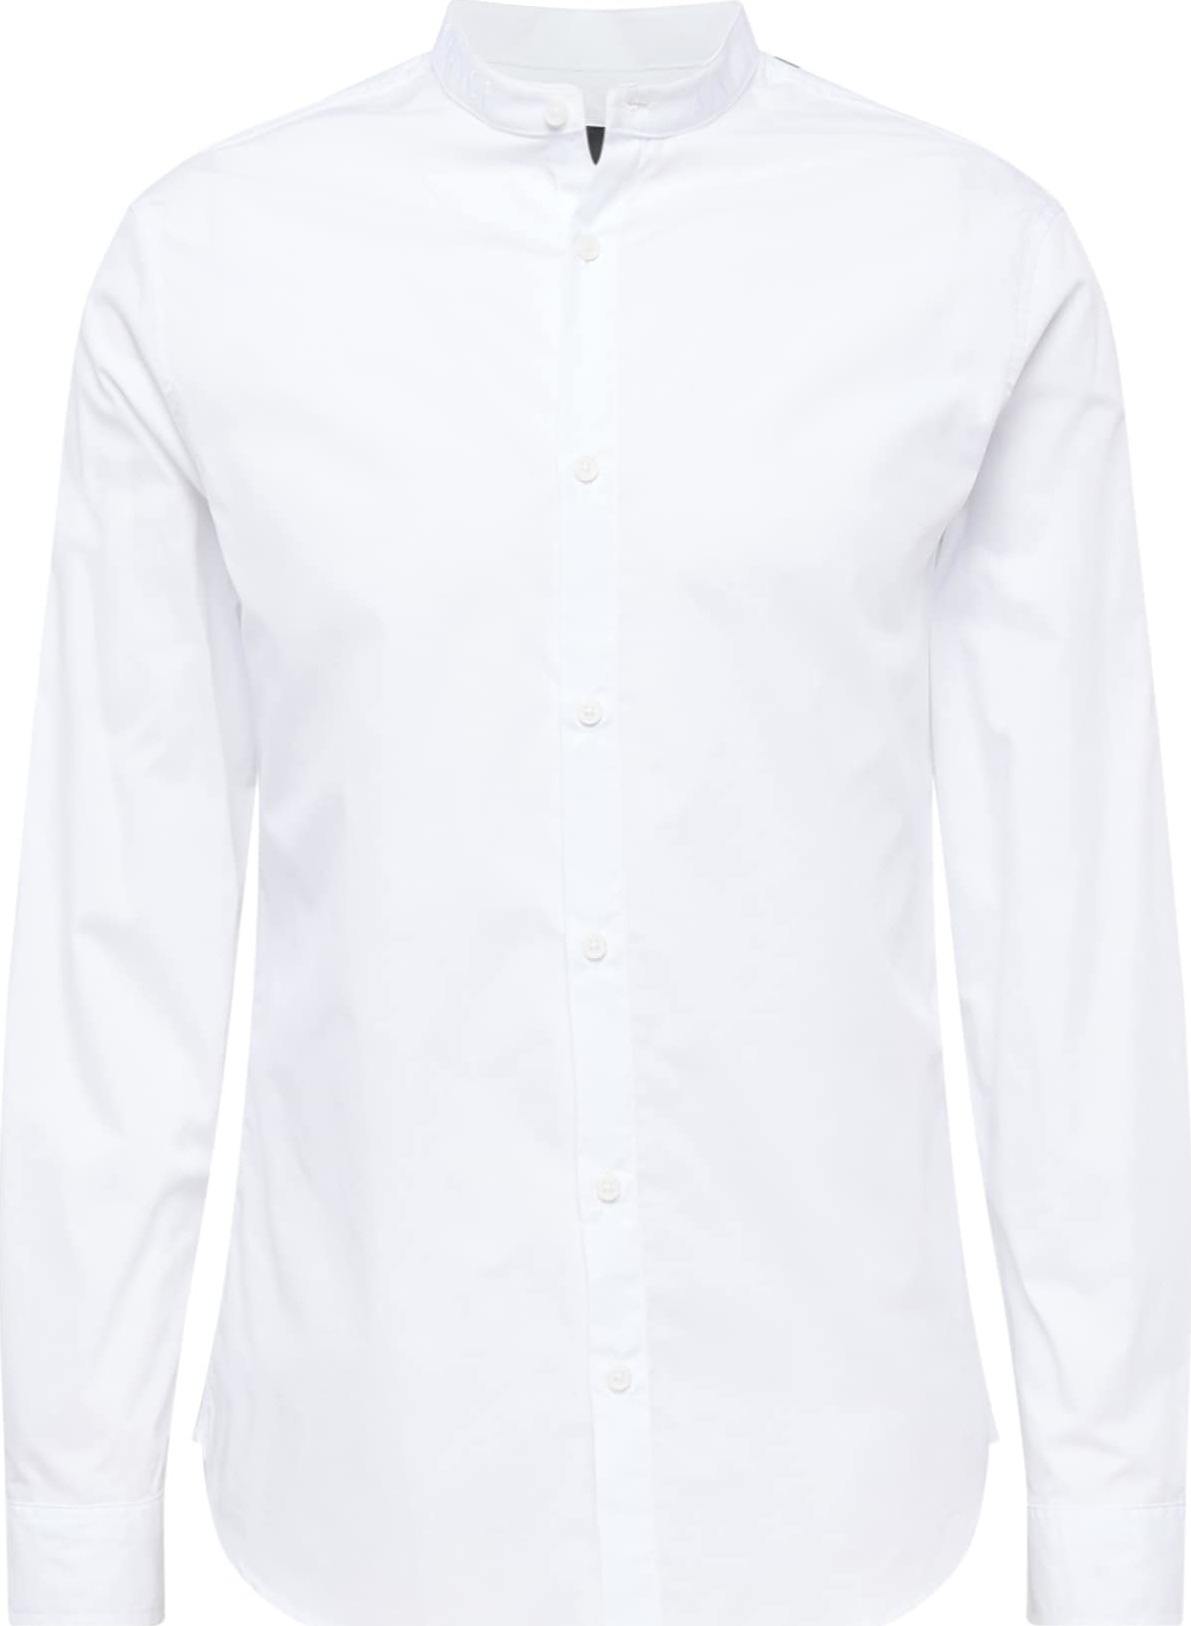 Košile Armani Exchange bílá